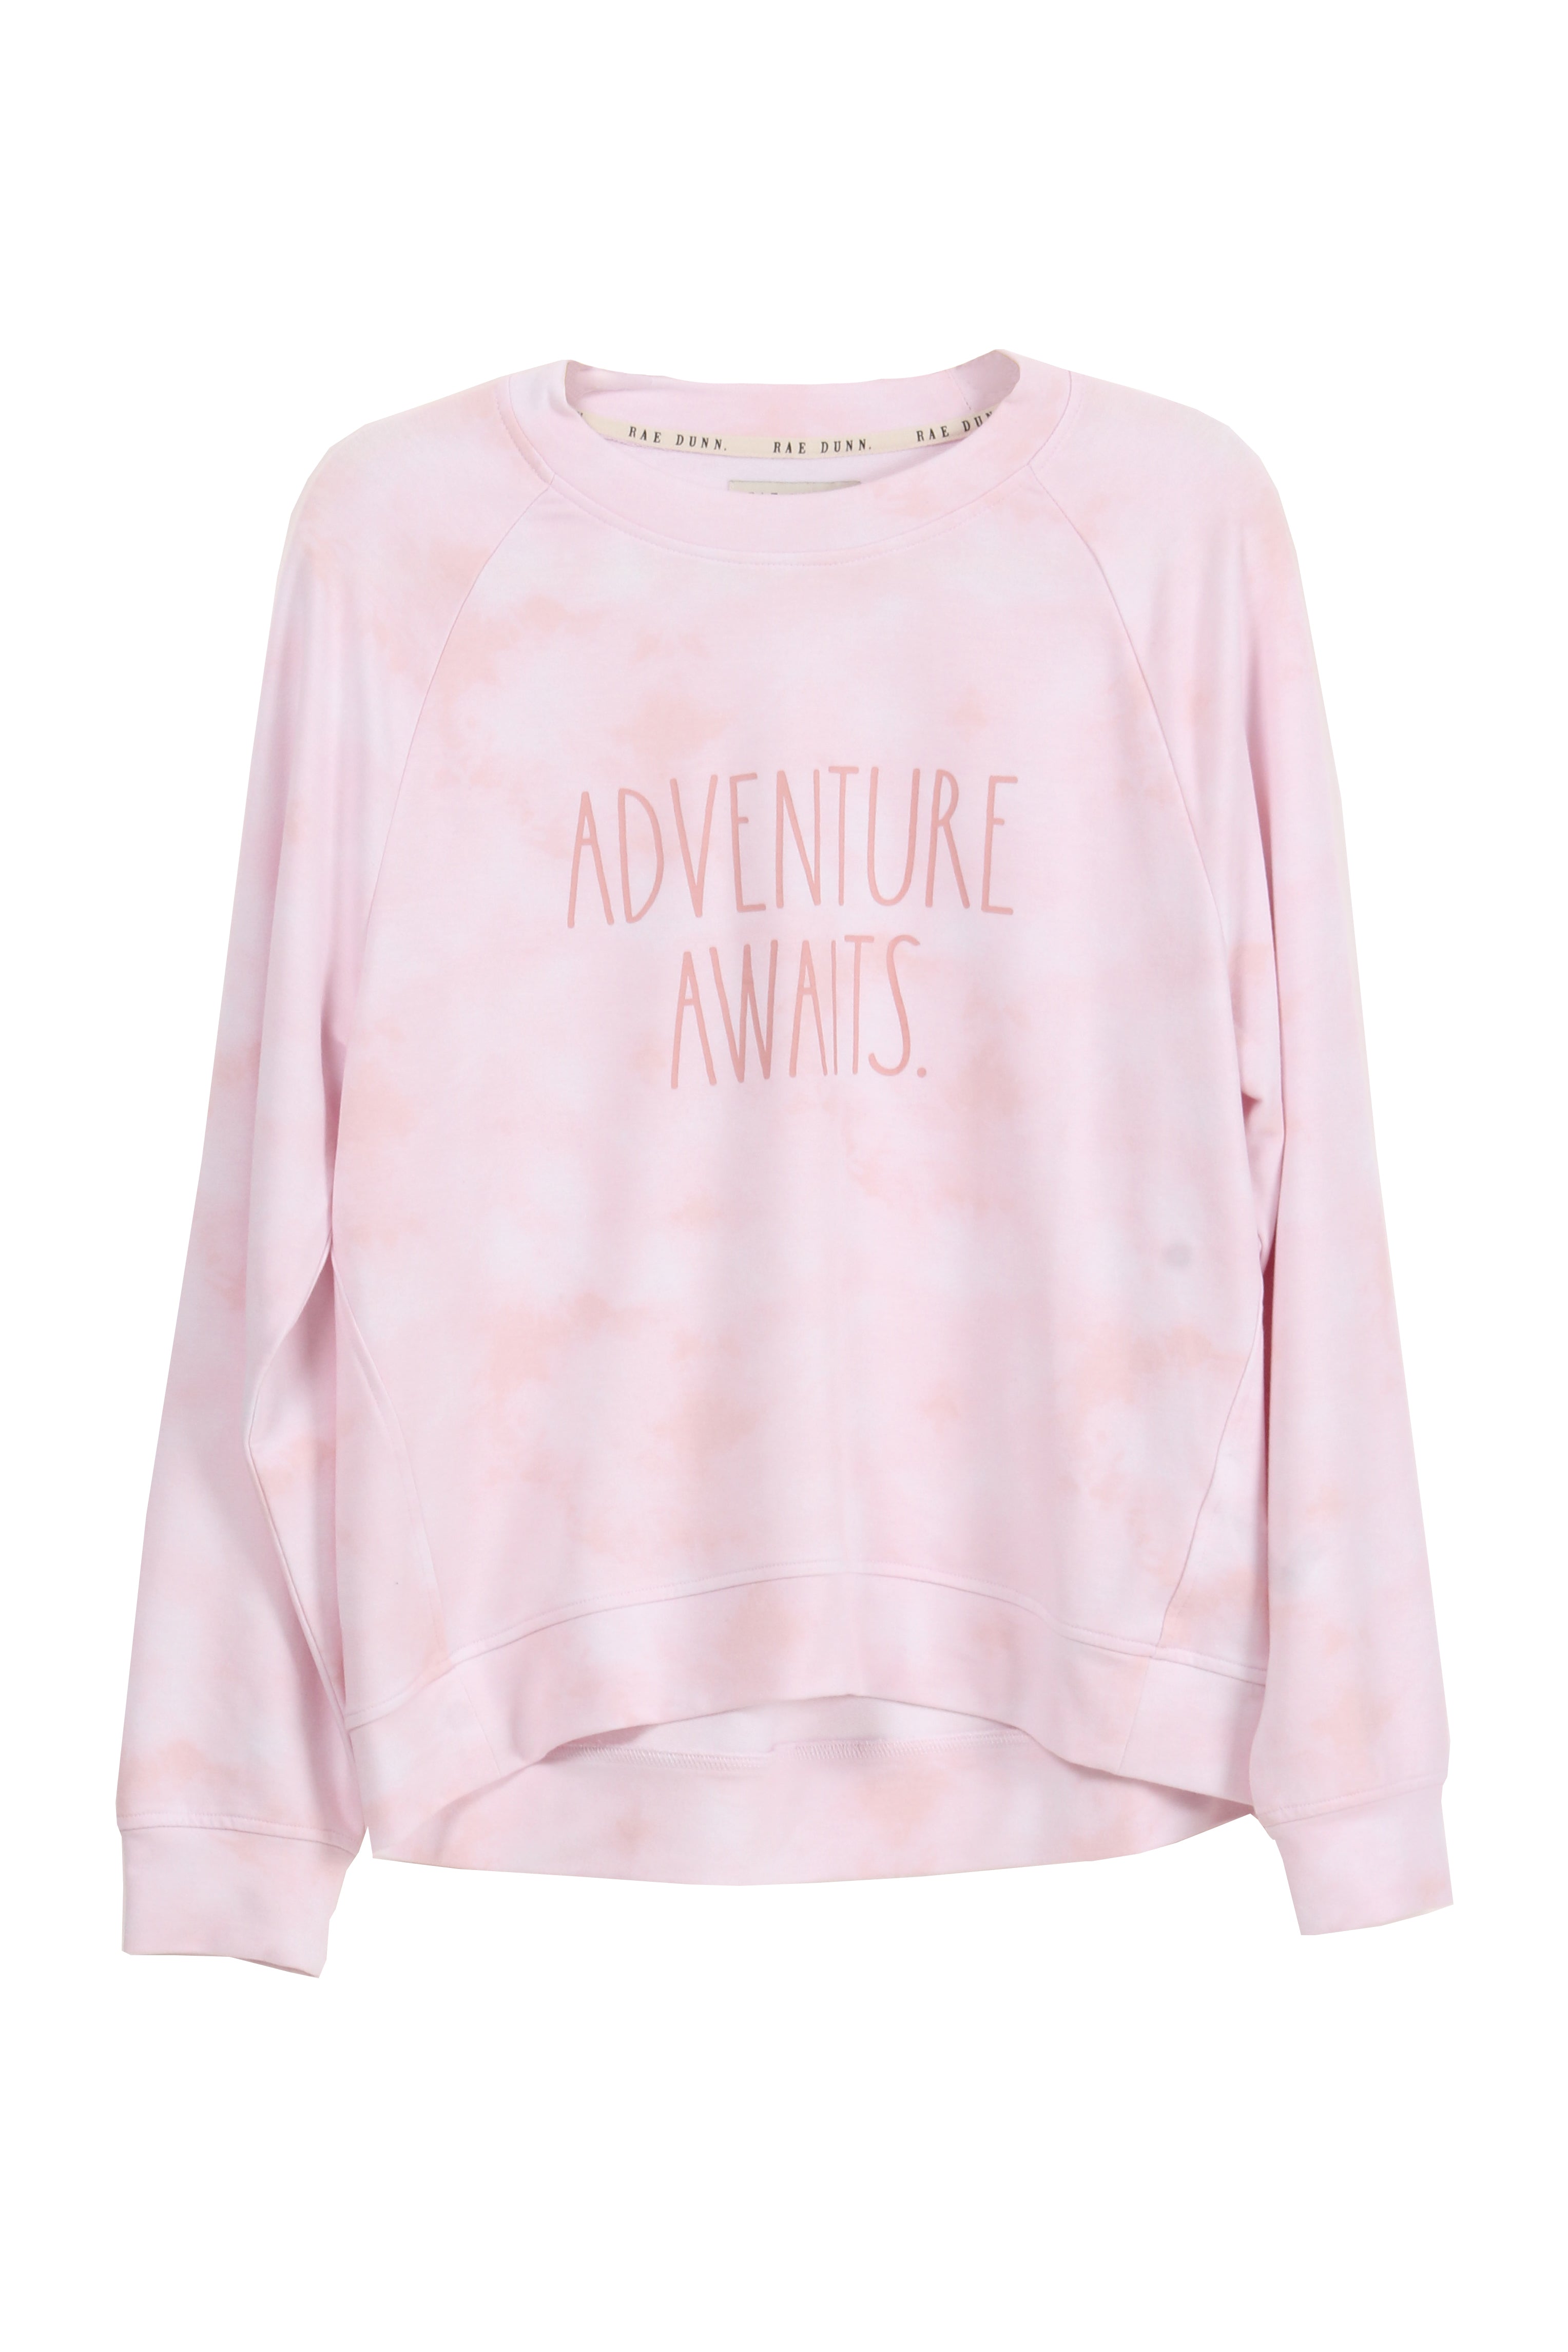 Women's "ADVENTURE AWAITS" Gallery Sweatshirt - Shop Rae Dunn Apparel and Sleepwear